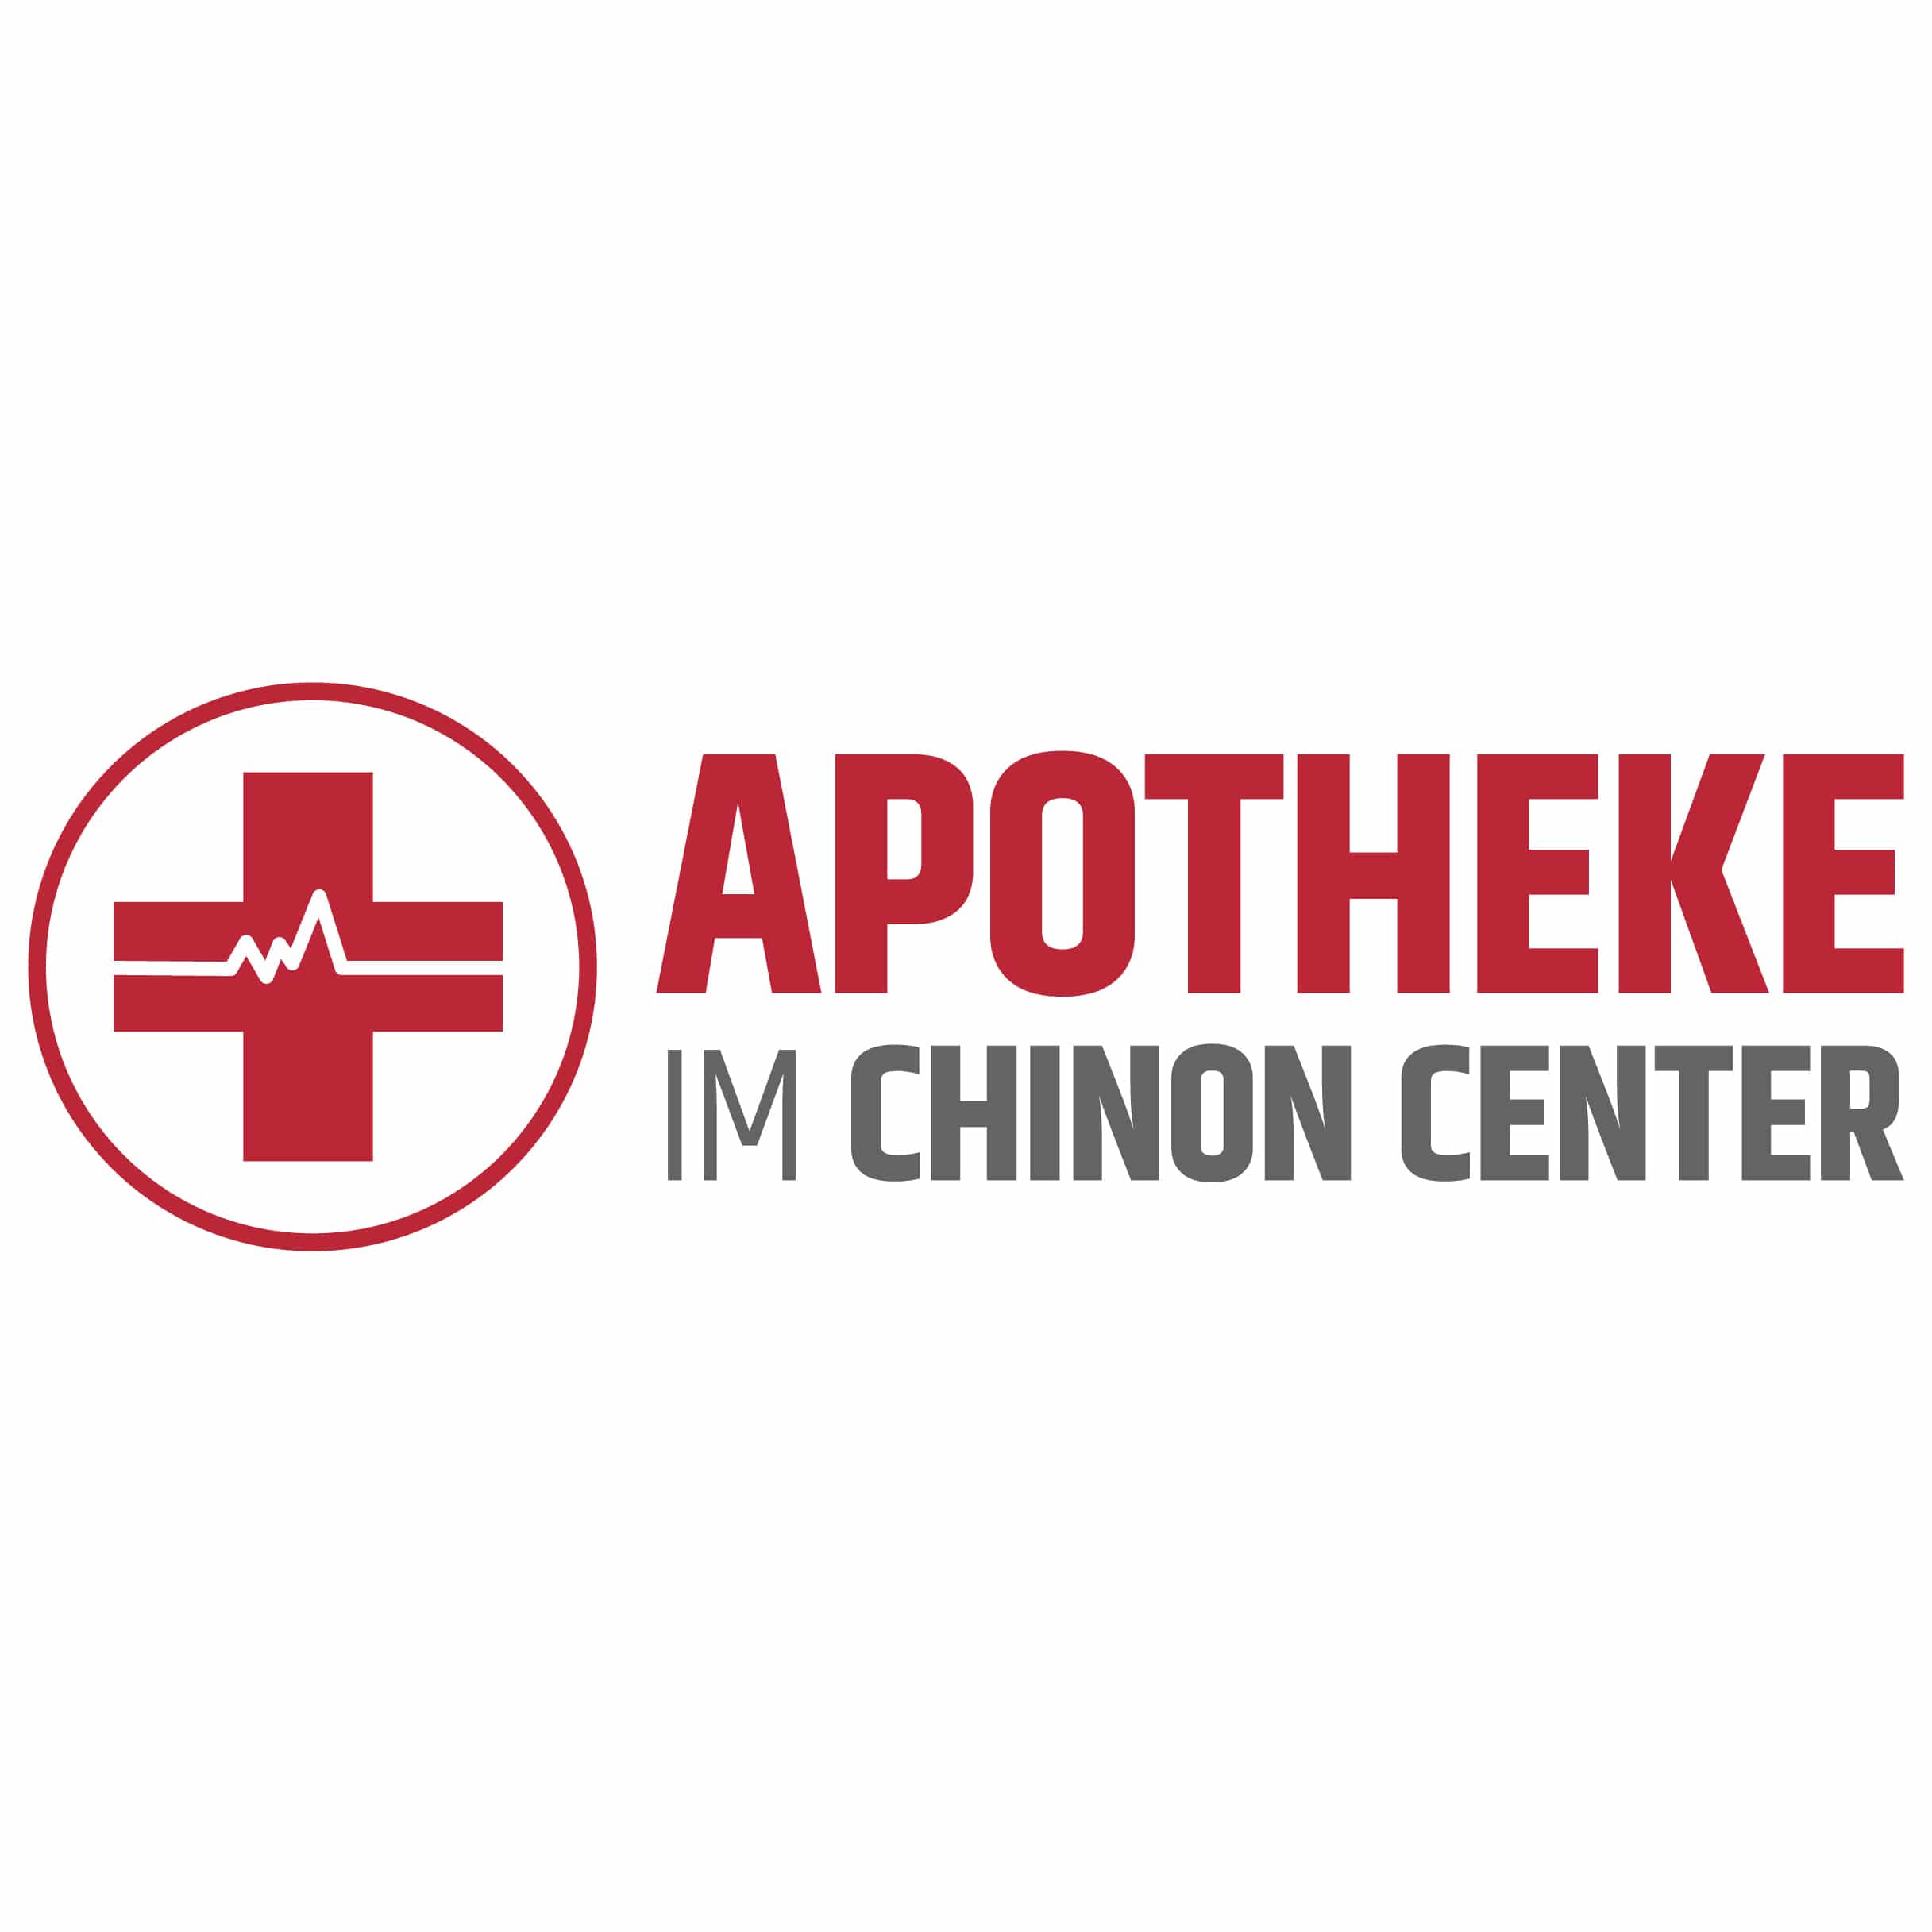 Apotheke_Chinon_Center_Logo_4c_Web